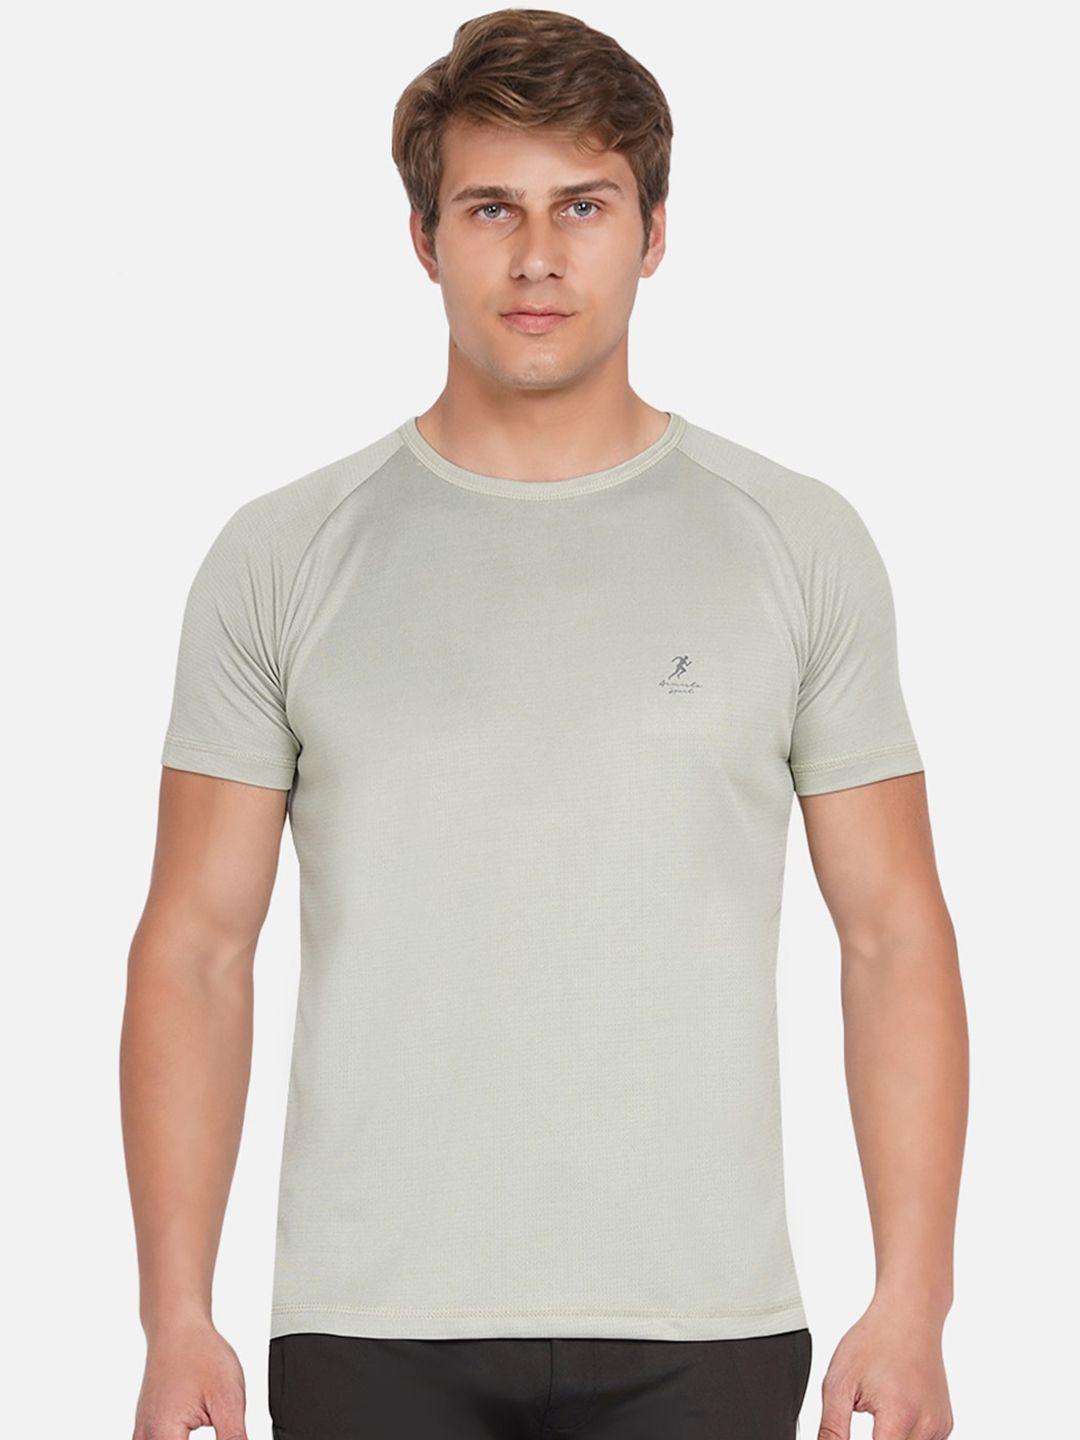 armisto men round neck training dri-fit t-shirt